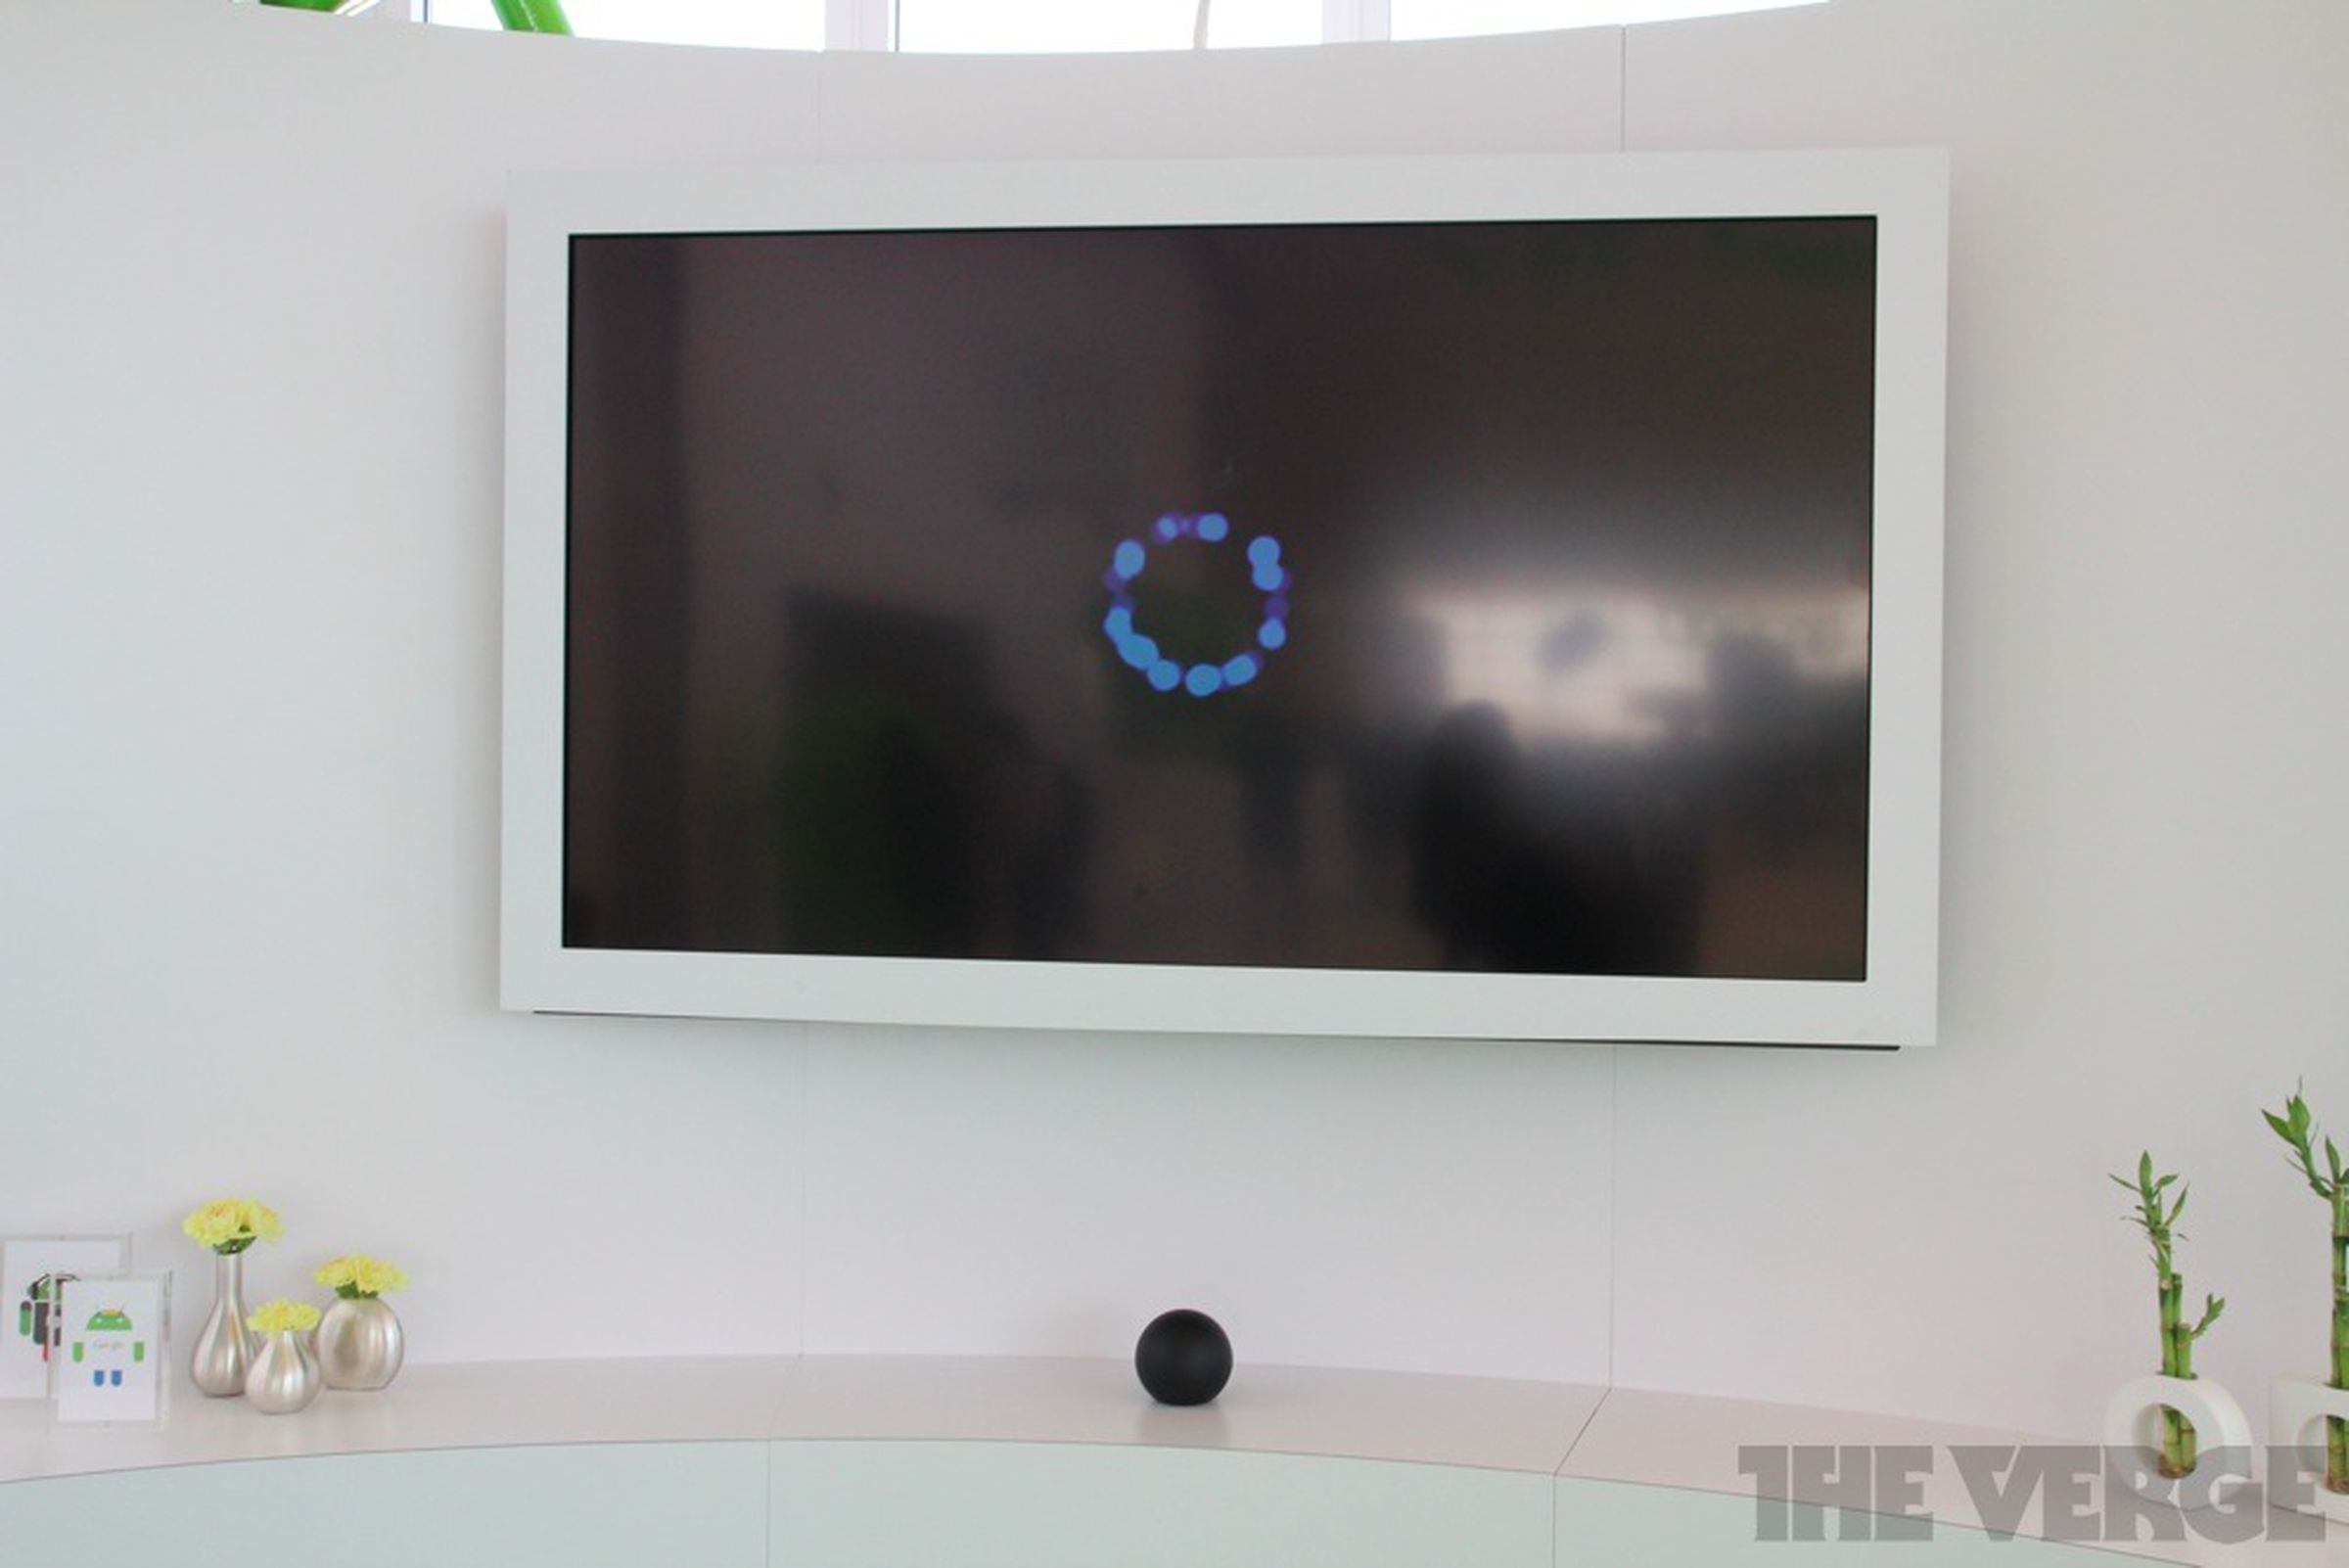 Google Nexus Q media streamer hands-on pictures